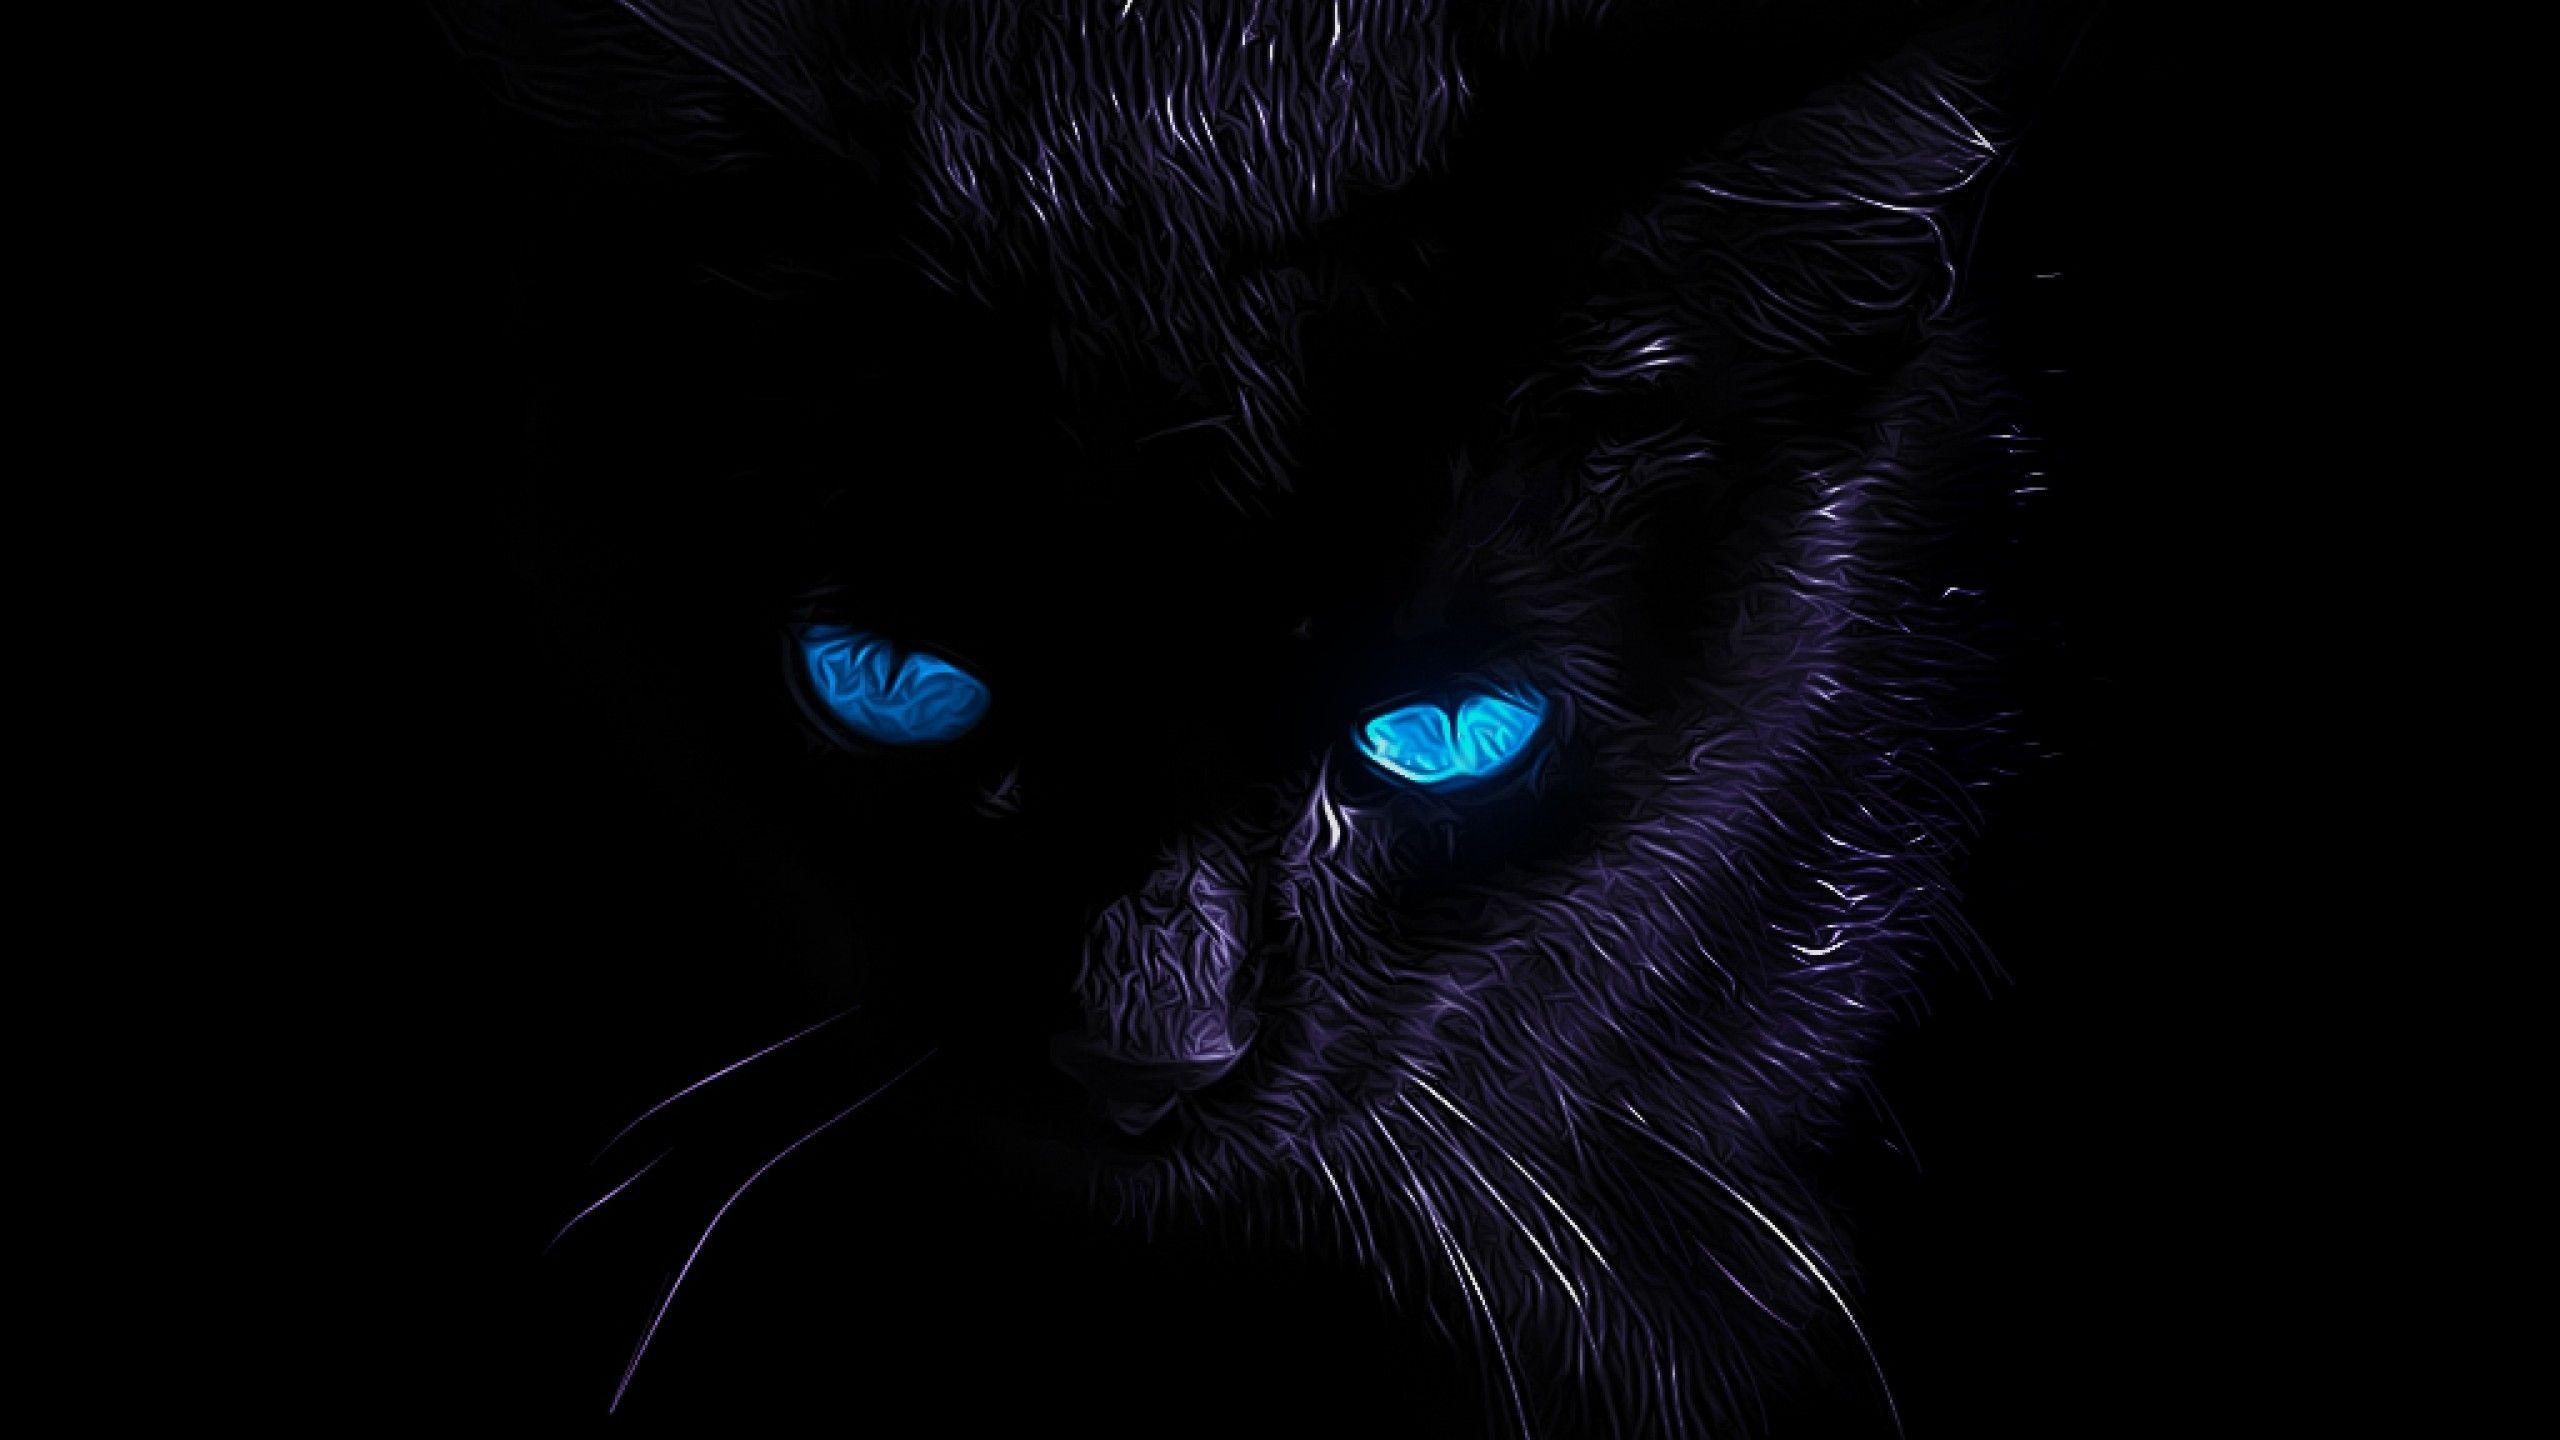 Black Cat Eyes Wallpapers - Top Free Black Cat Eyes Backgrounds